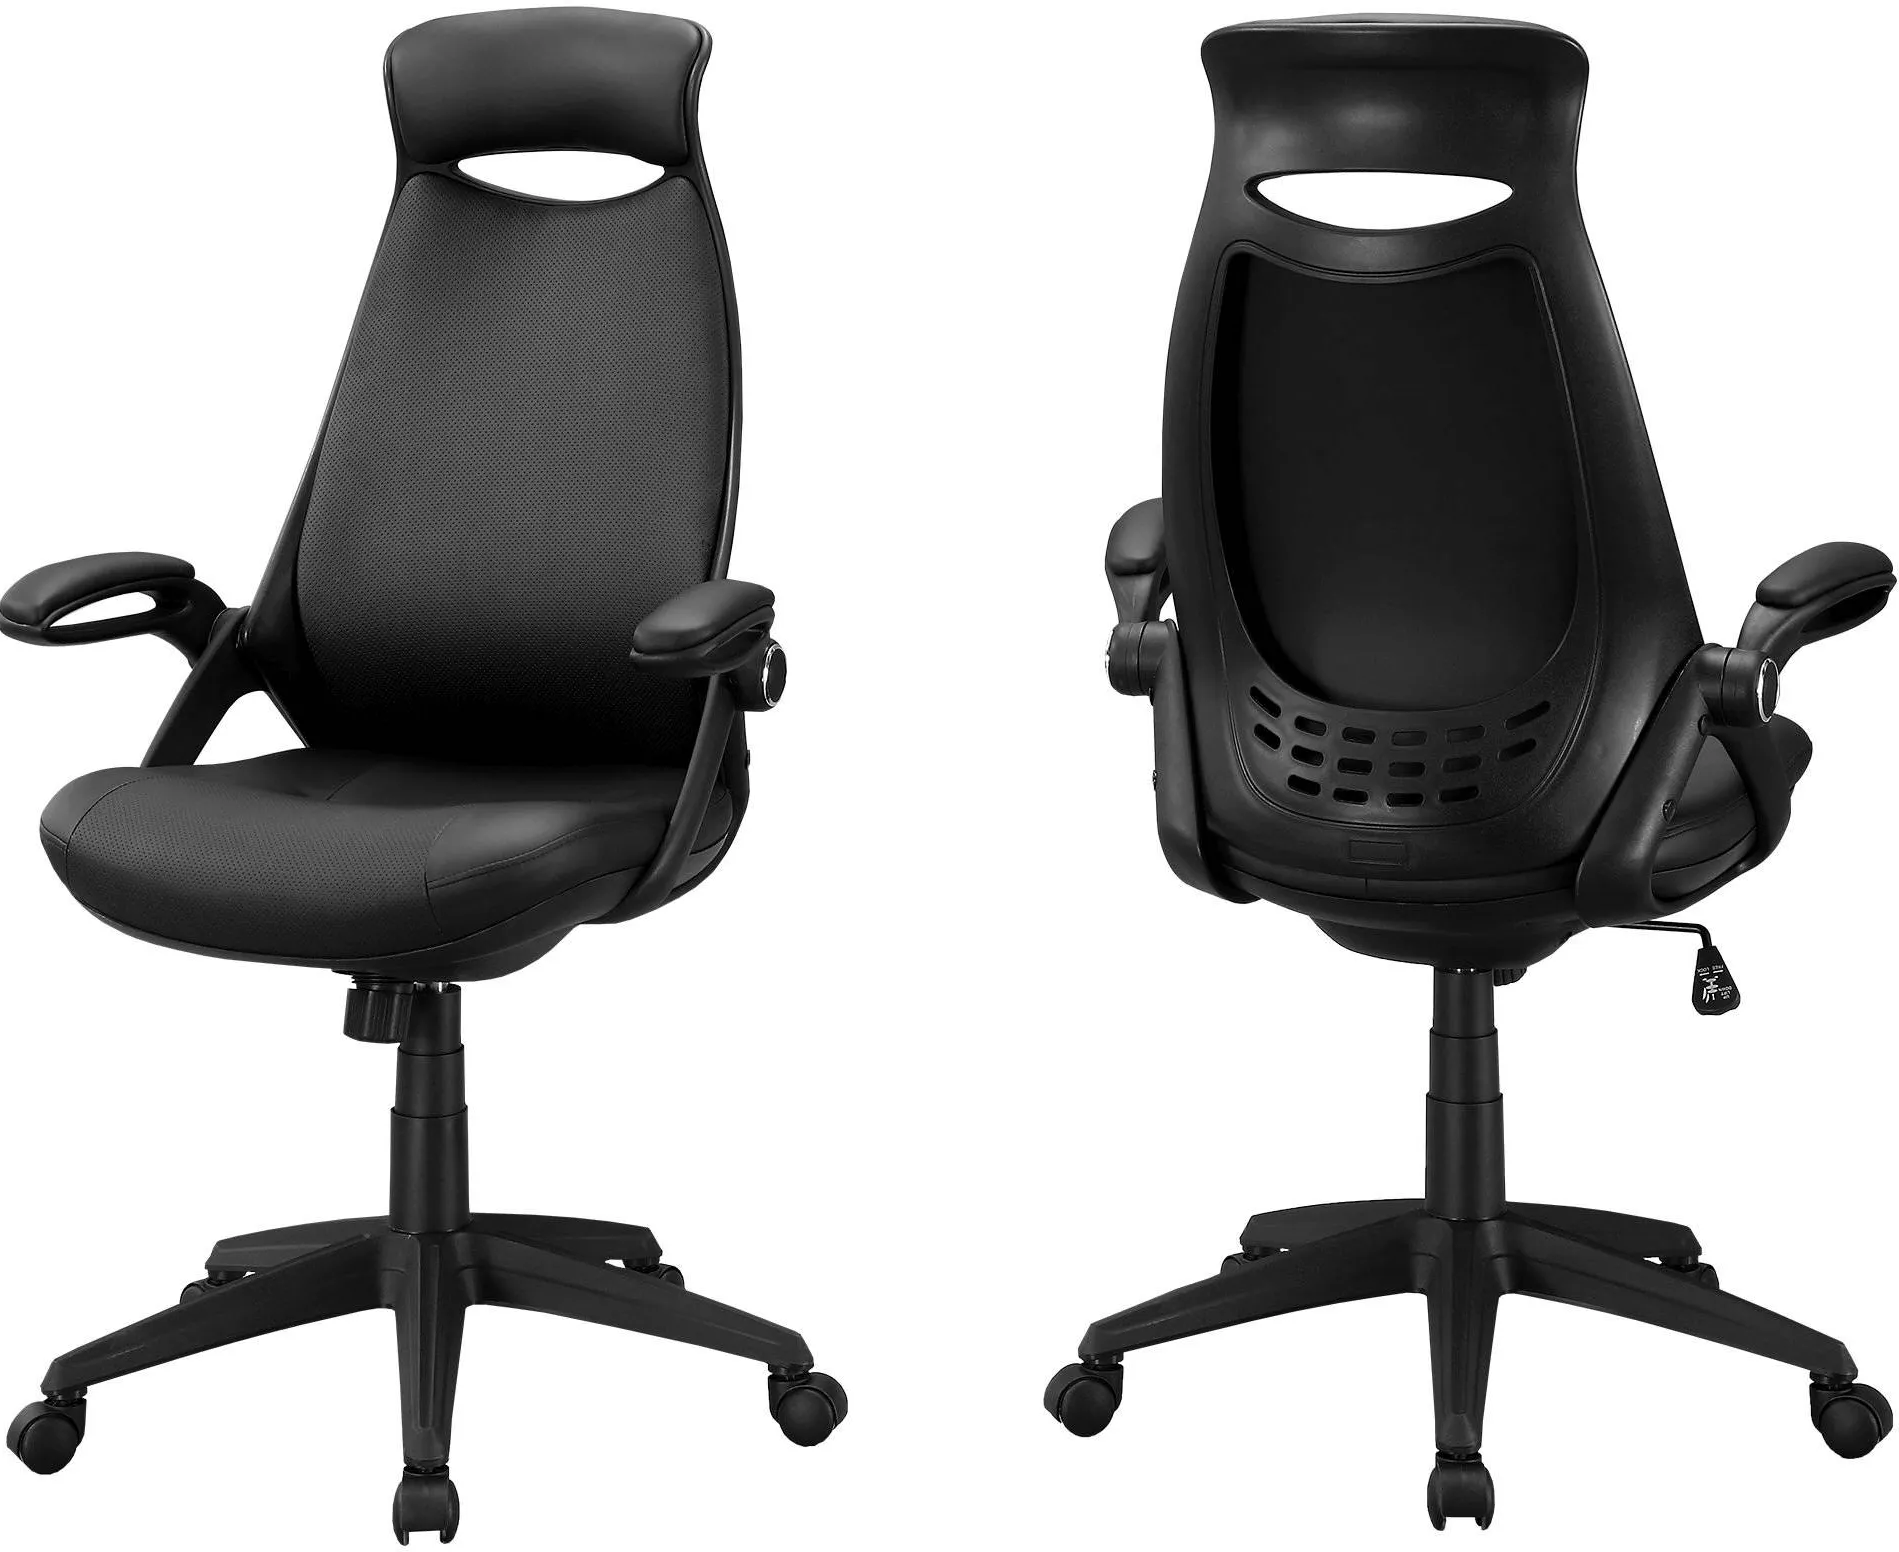 Office Chair, Adjustable Height, Swivel, Ergonomic, Armrests, Computer Desk, Work, Metal, Fabric, Black, Contemporary, Modern